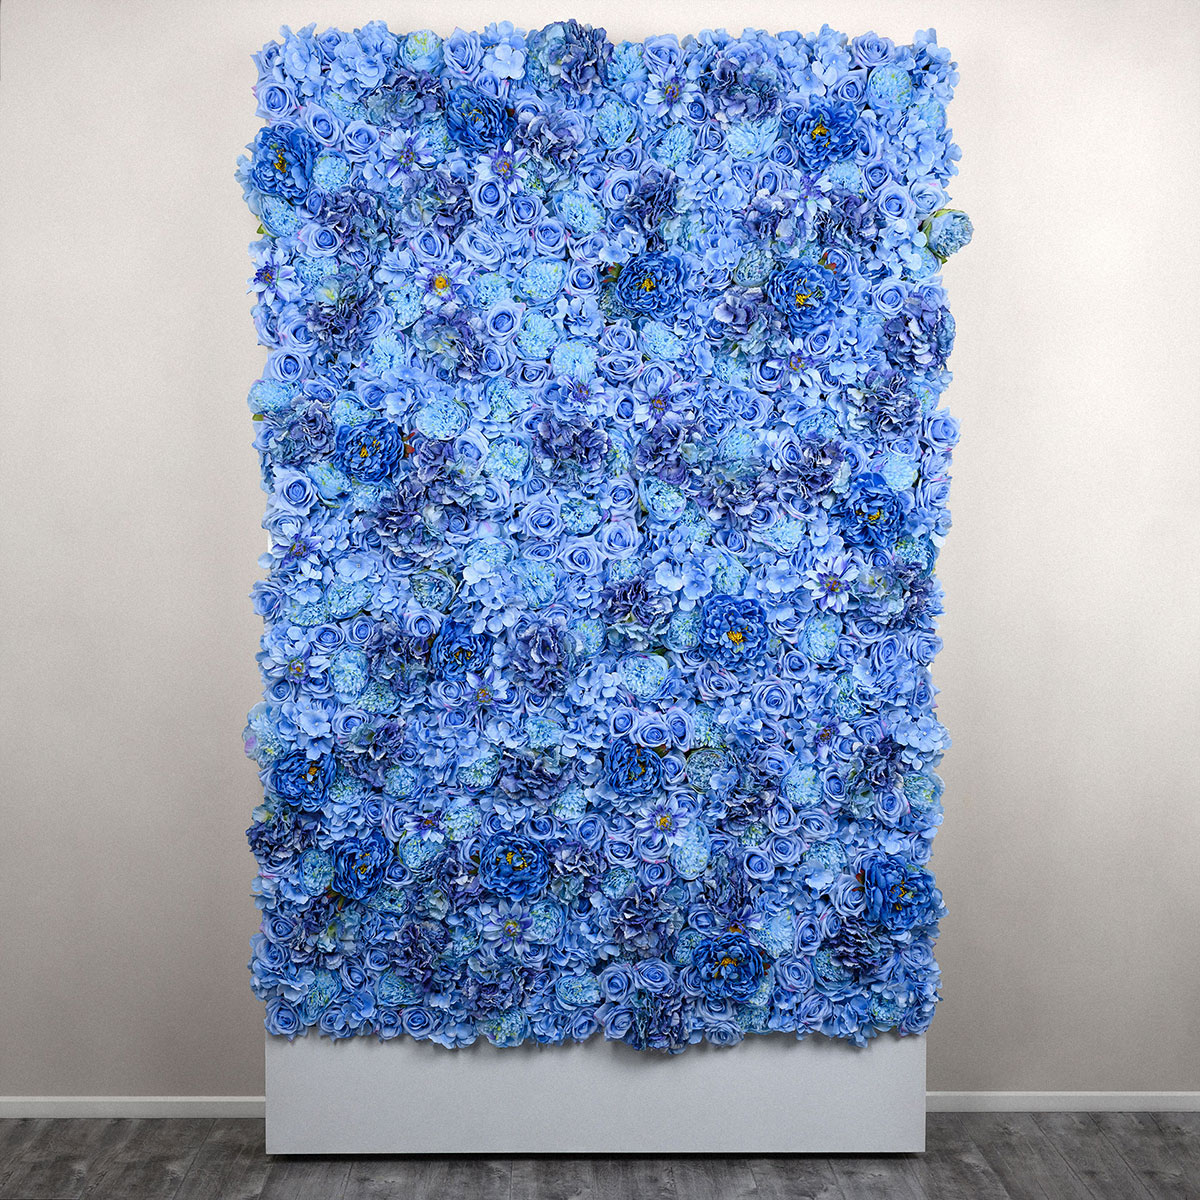 Blue Flower Wall 6 feet by 4 feet